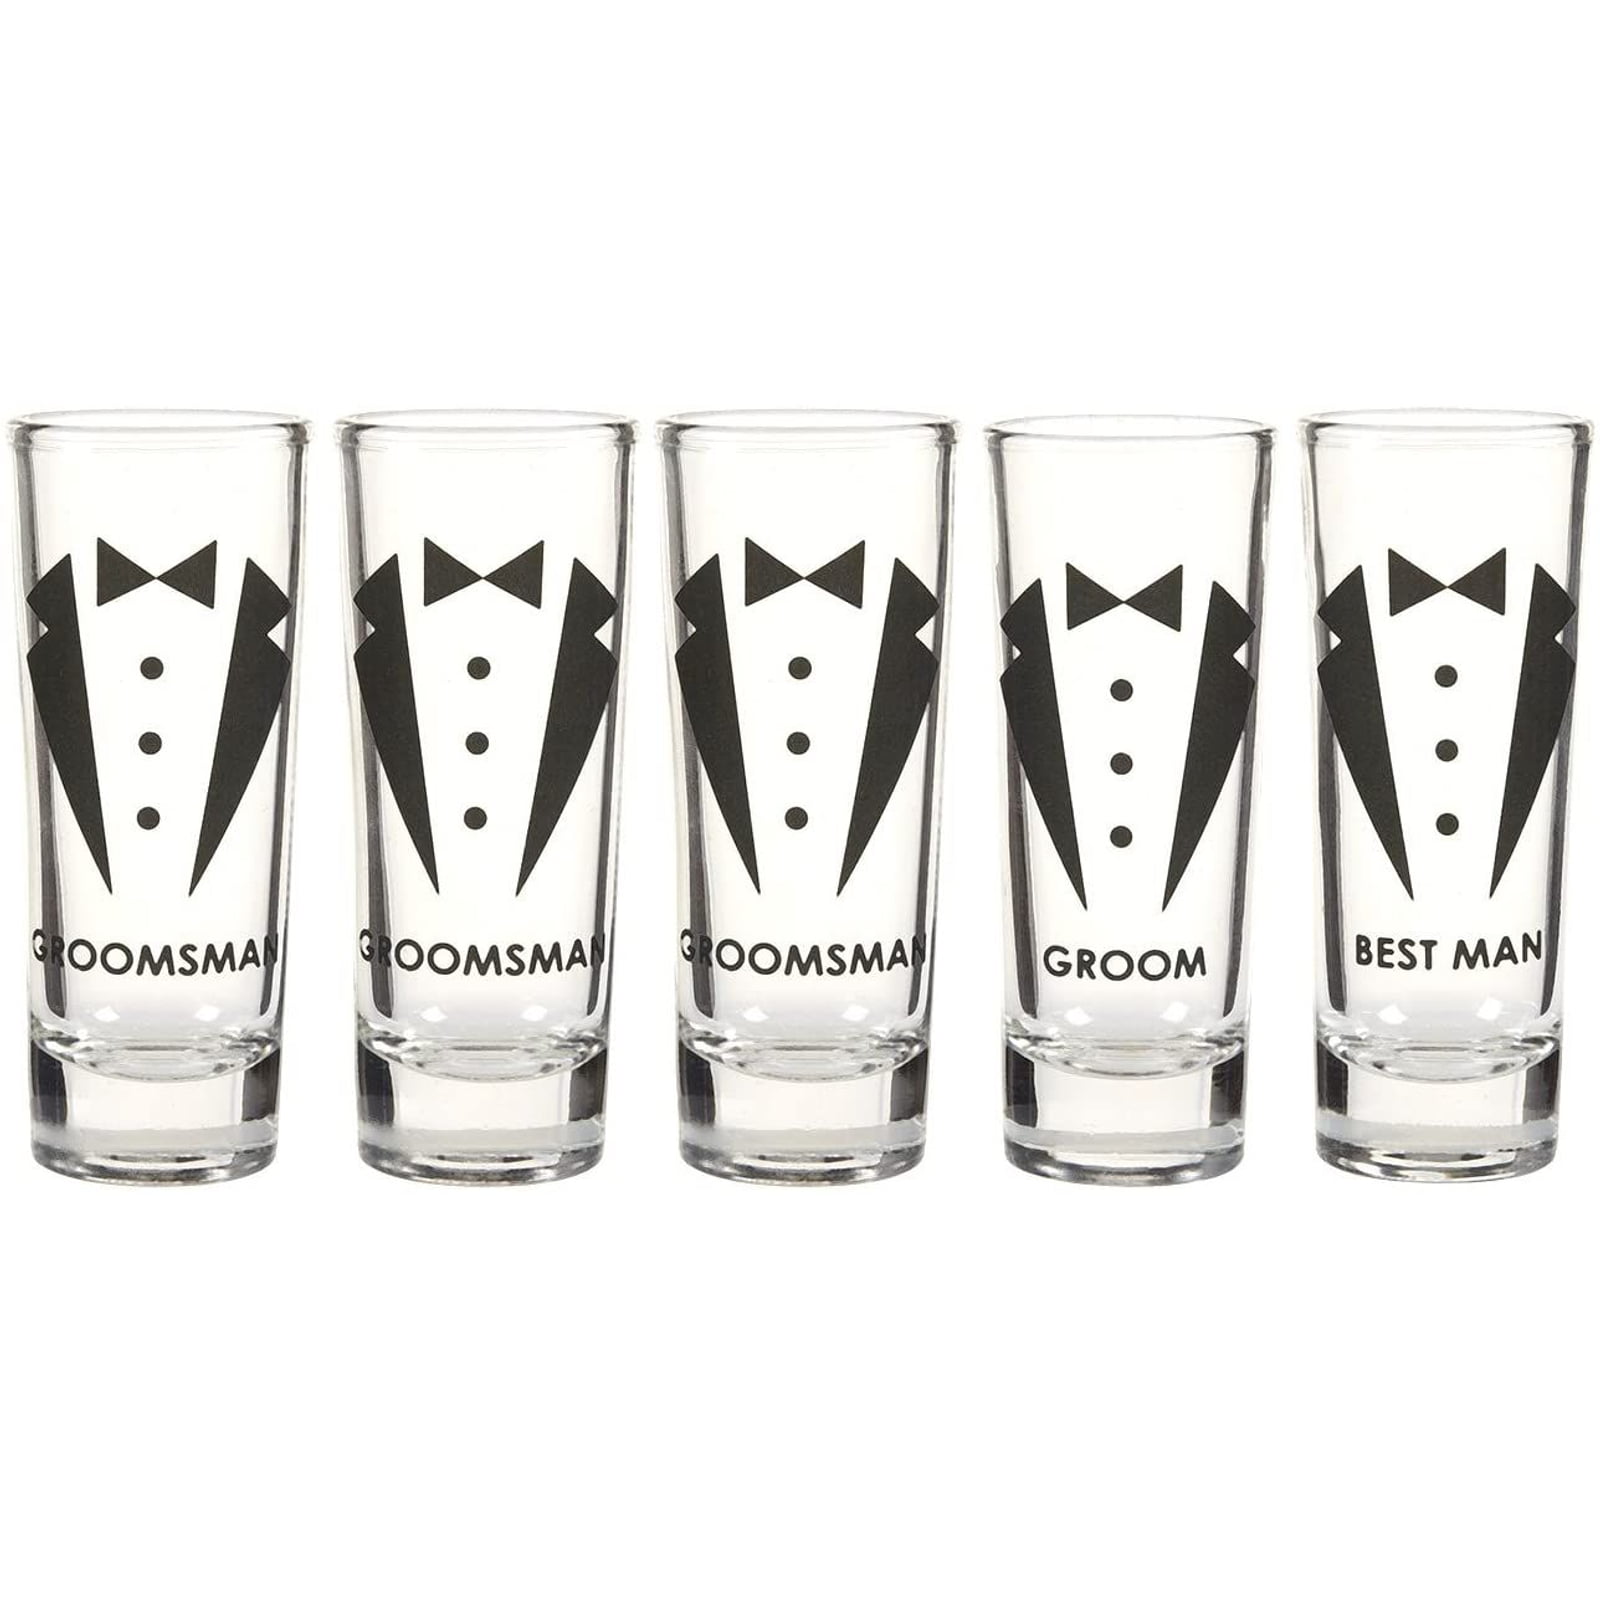 5 personalized TUXEDO shot glasses/ groomsman gifts 